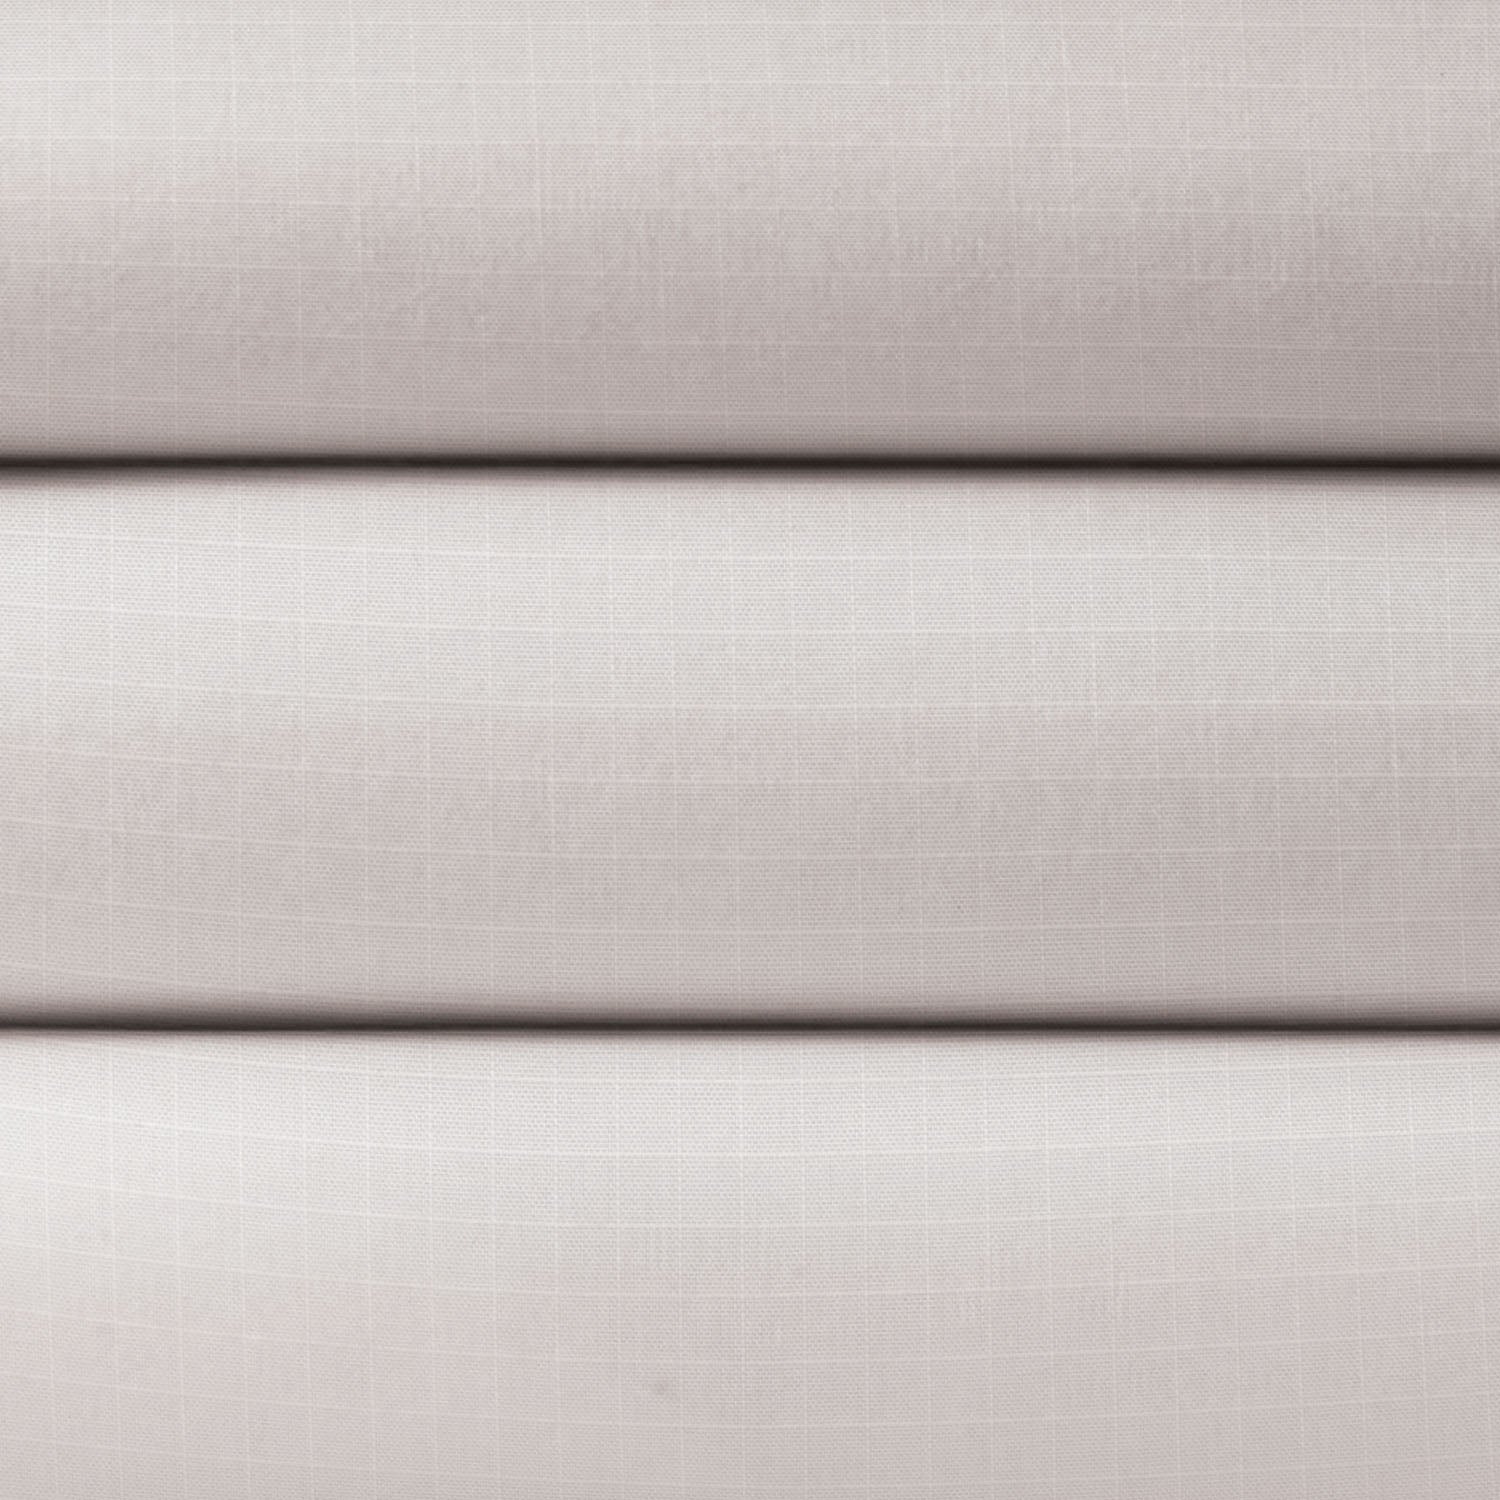 Cotton-nylon fabric